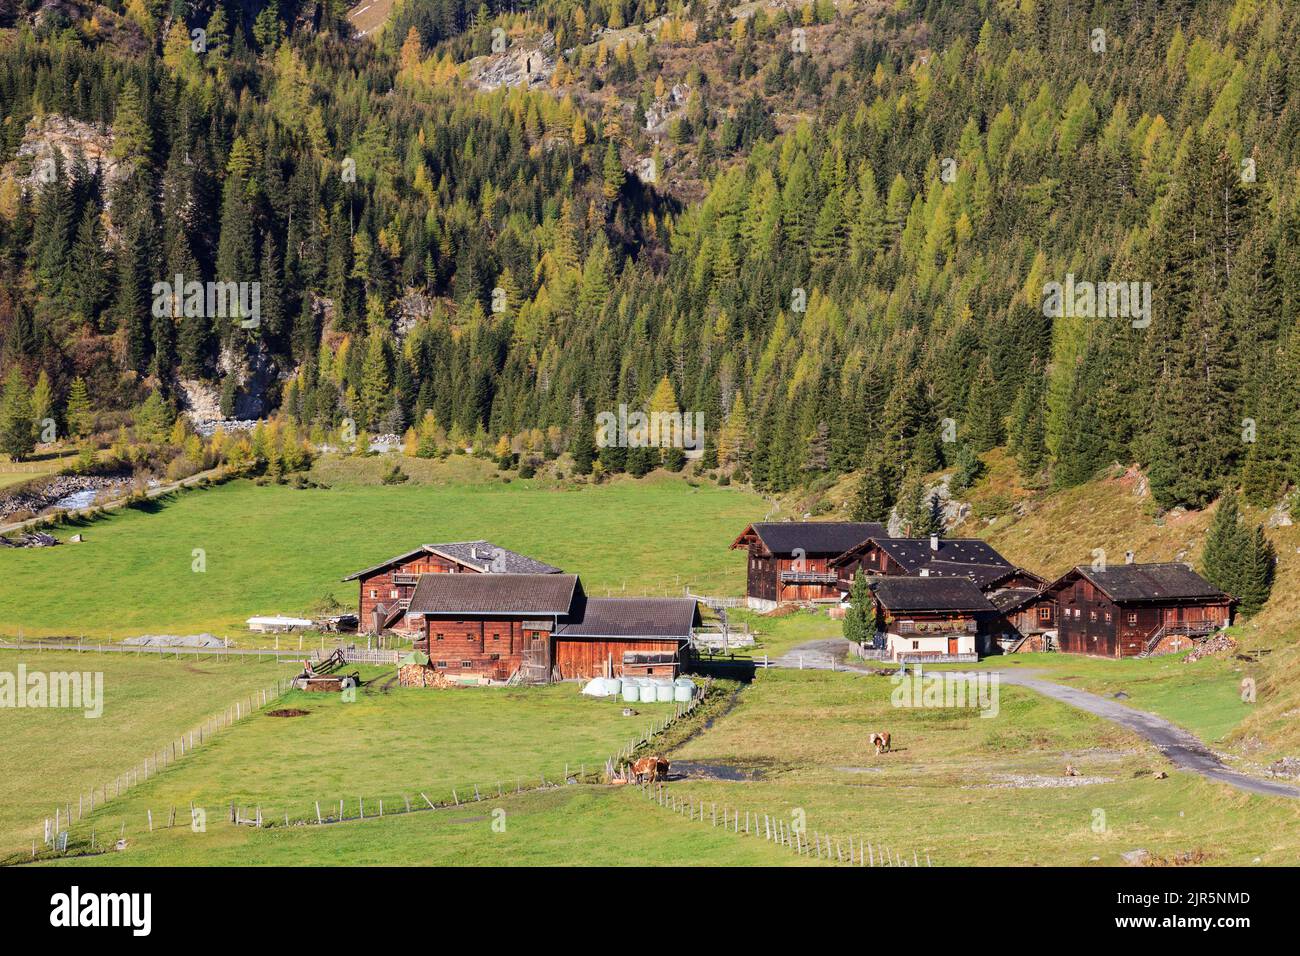 Alp farm in a valley Stock Photo